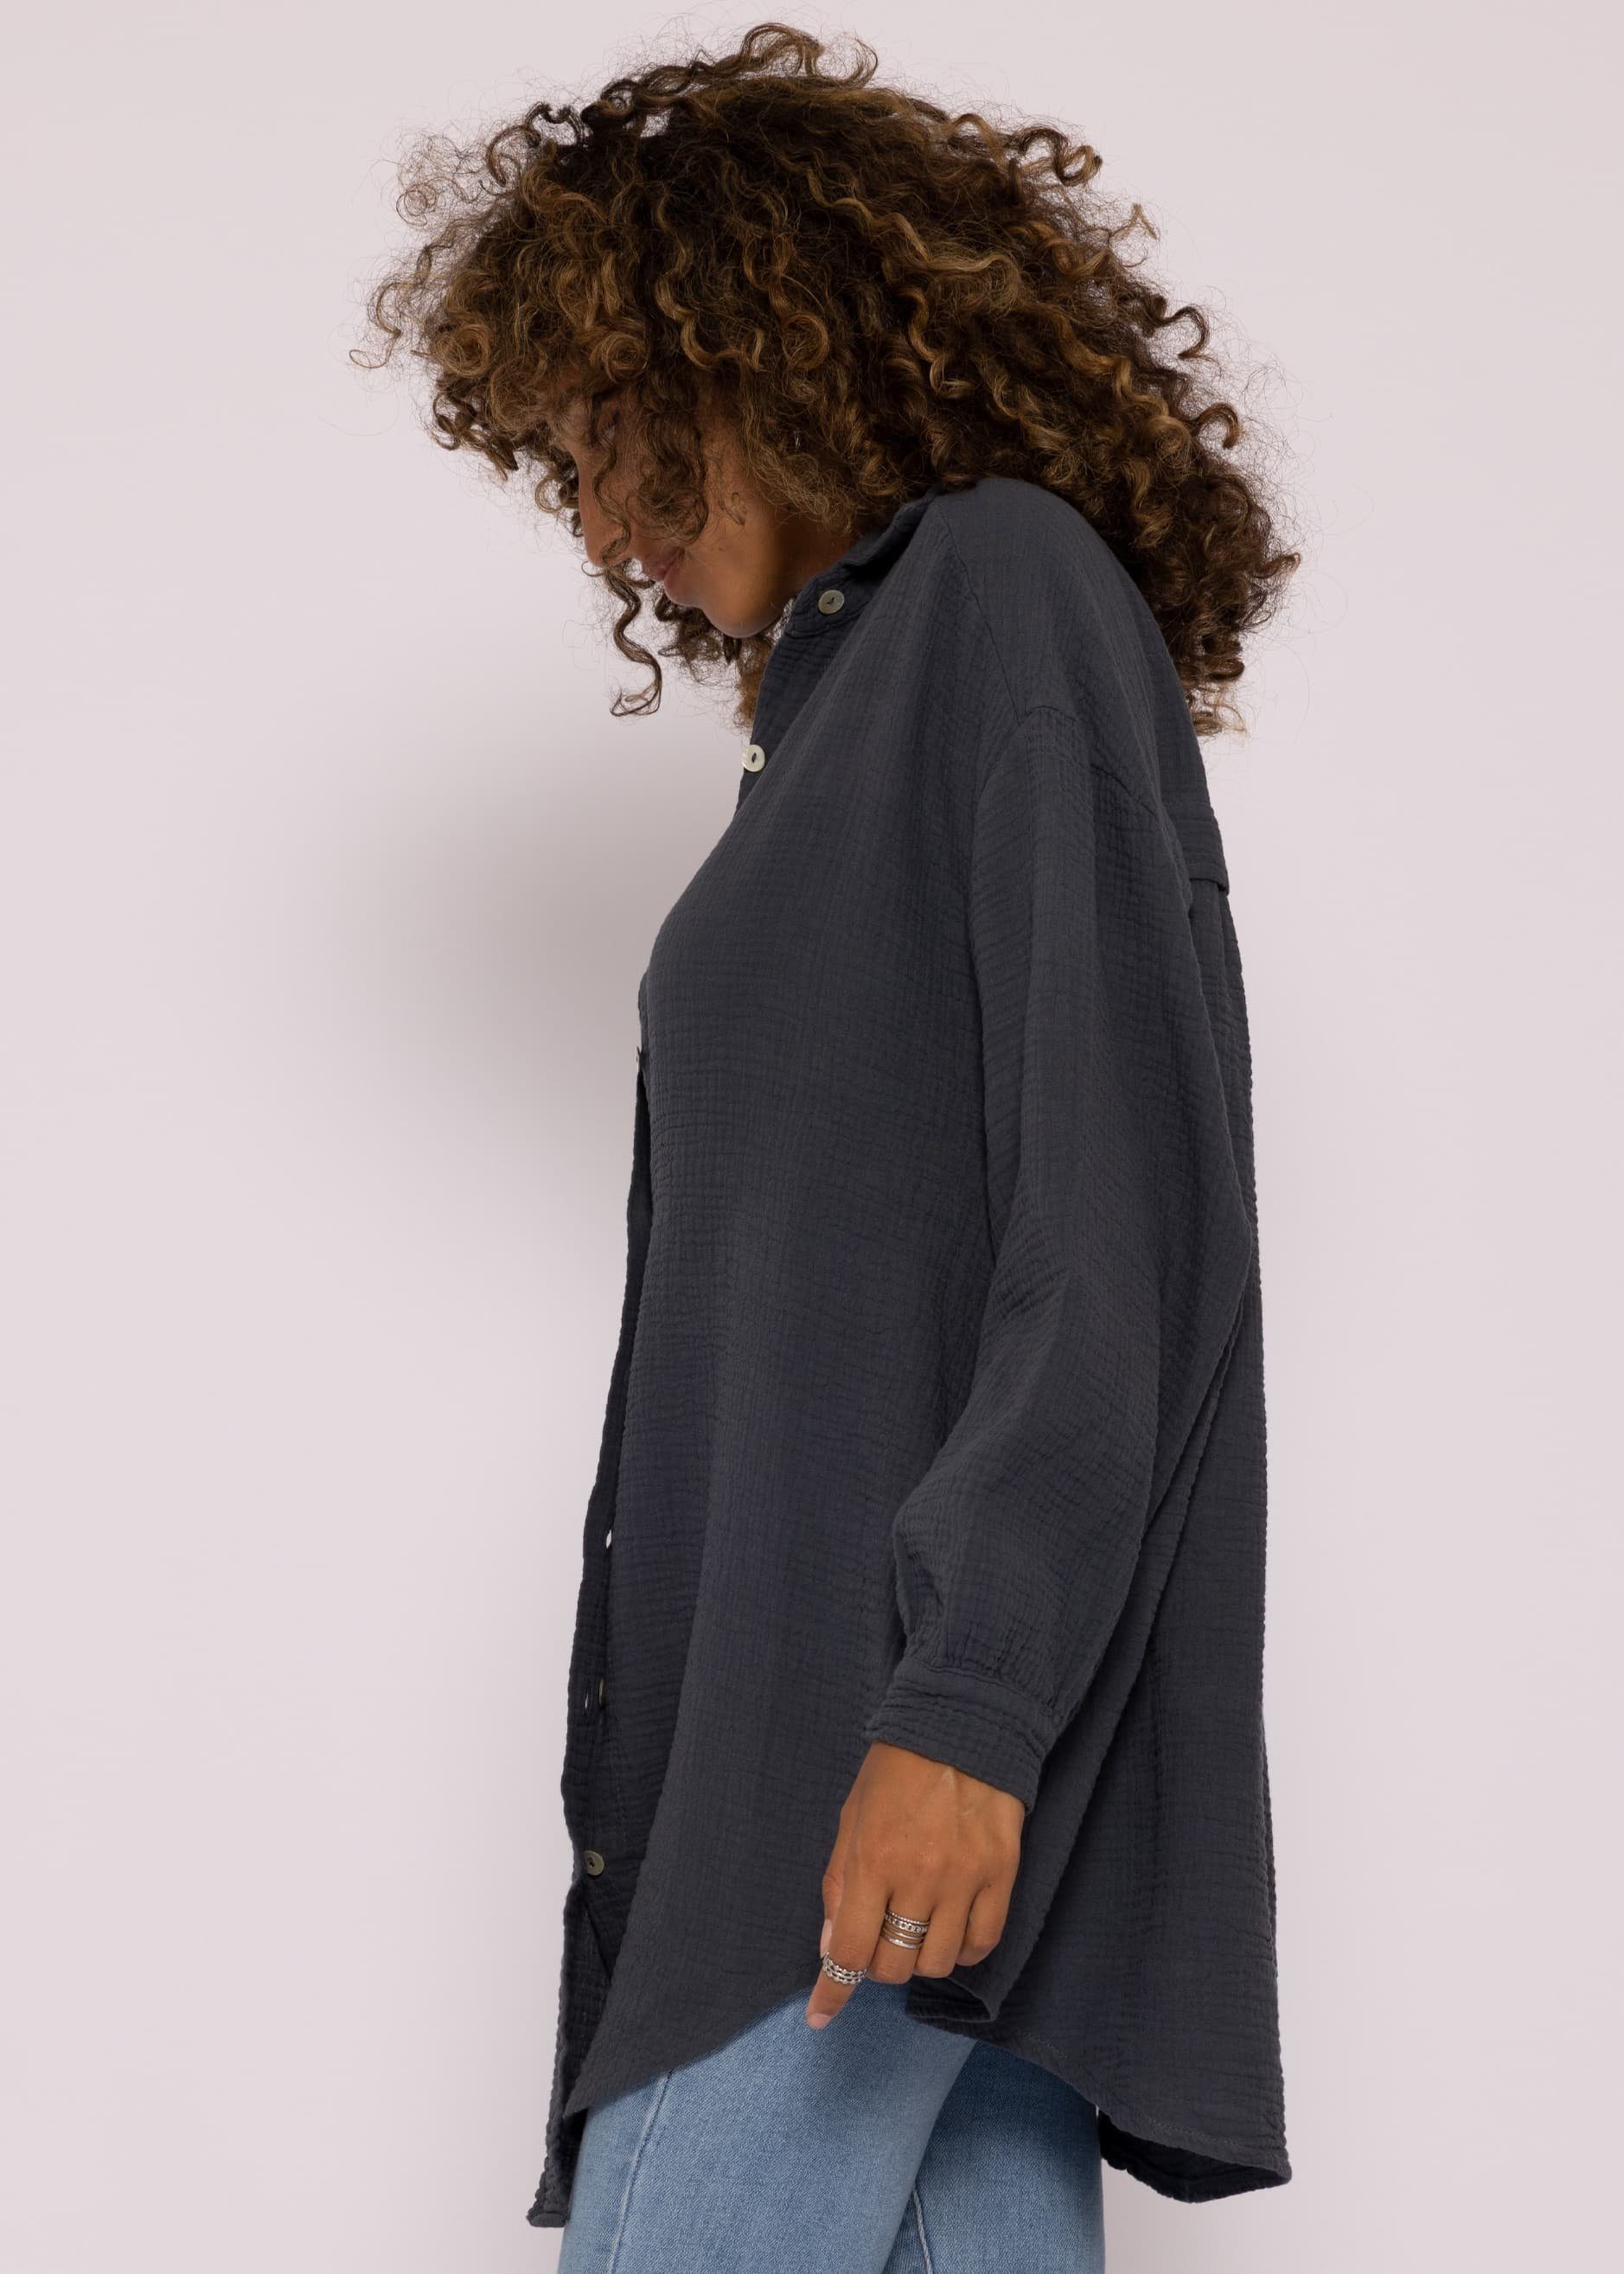 One Hemdbluse Damen V-Ausschnitt, Size 36-48) Baumwolle SASSYCLASSY Bluse aus Longbluse Dunkelgrau Musselin (Gr. mit Langarm Oversize lang